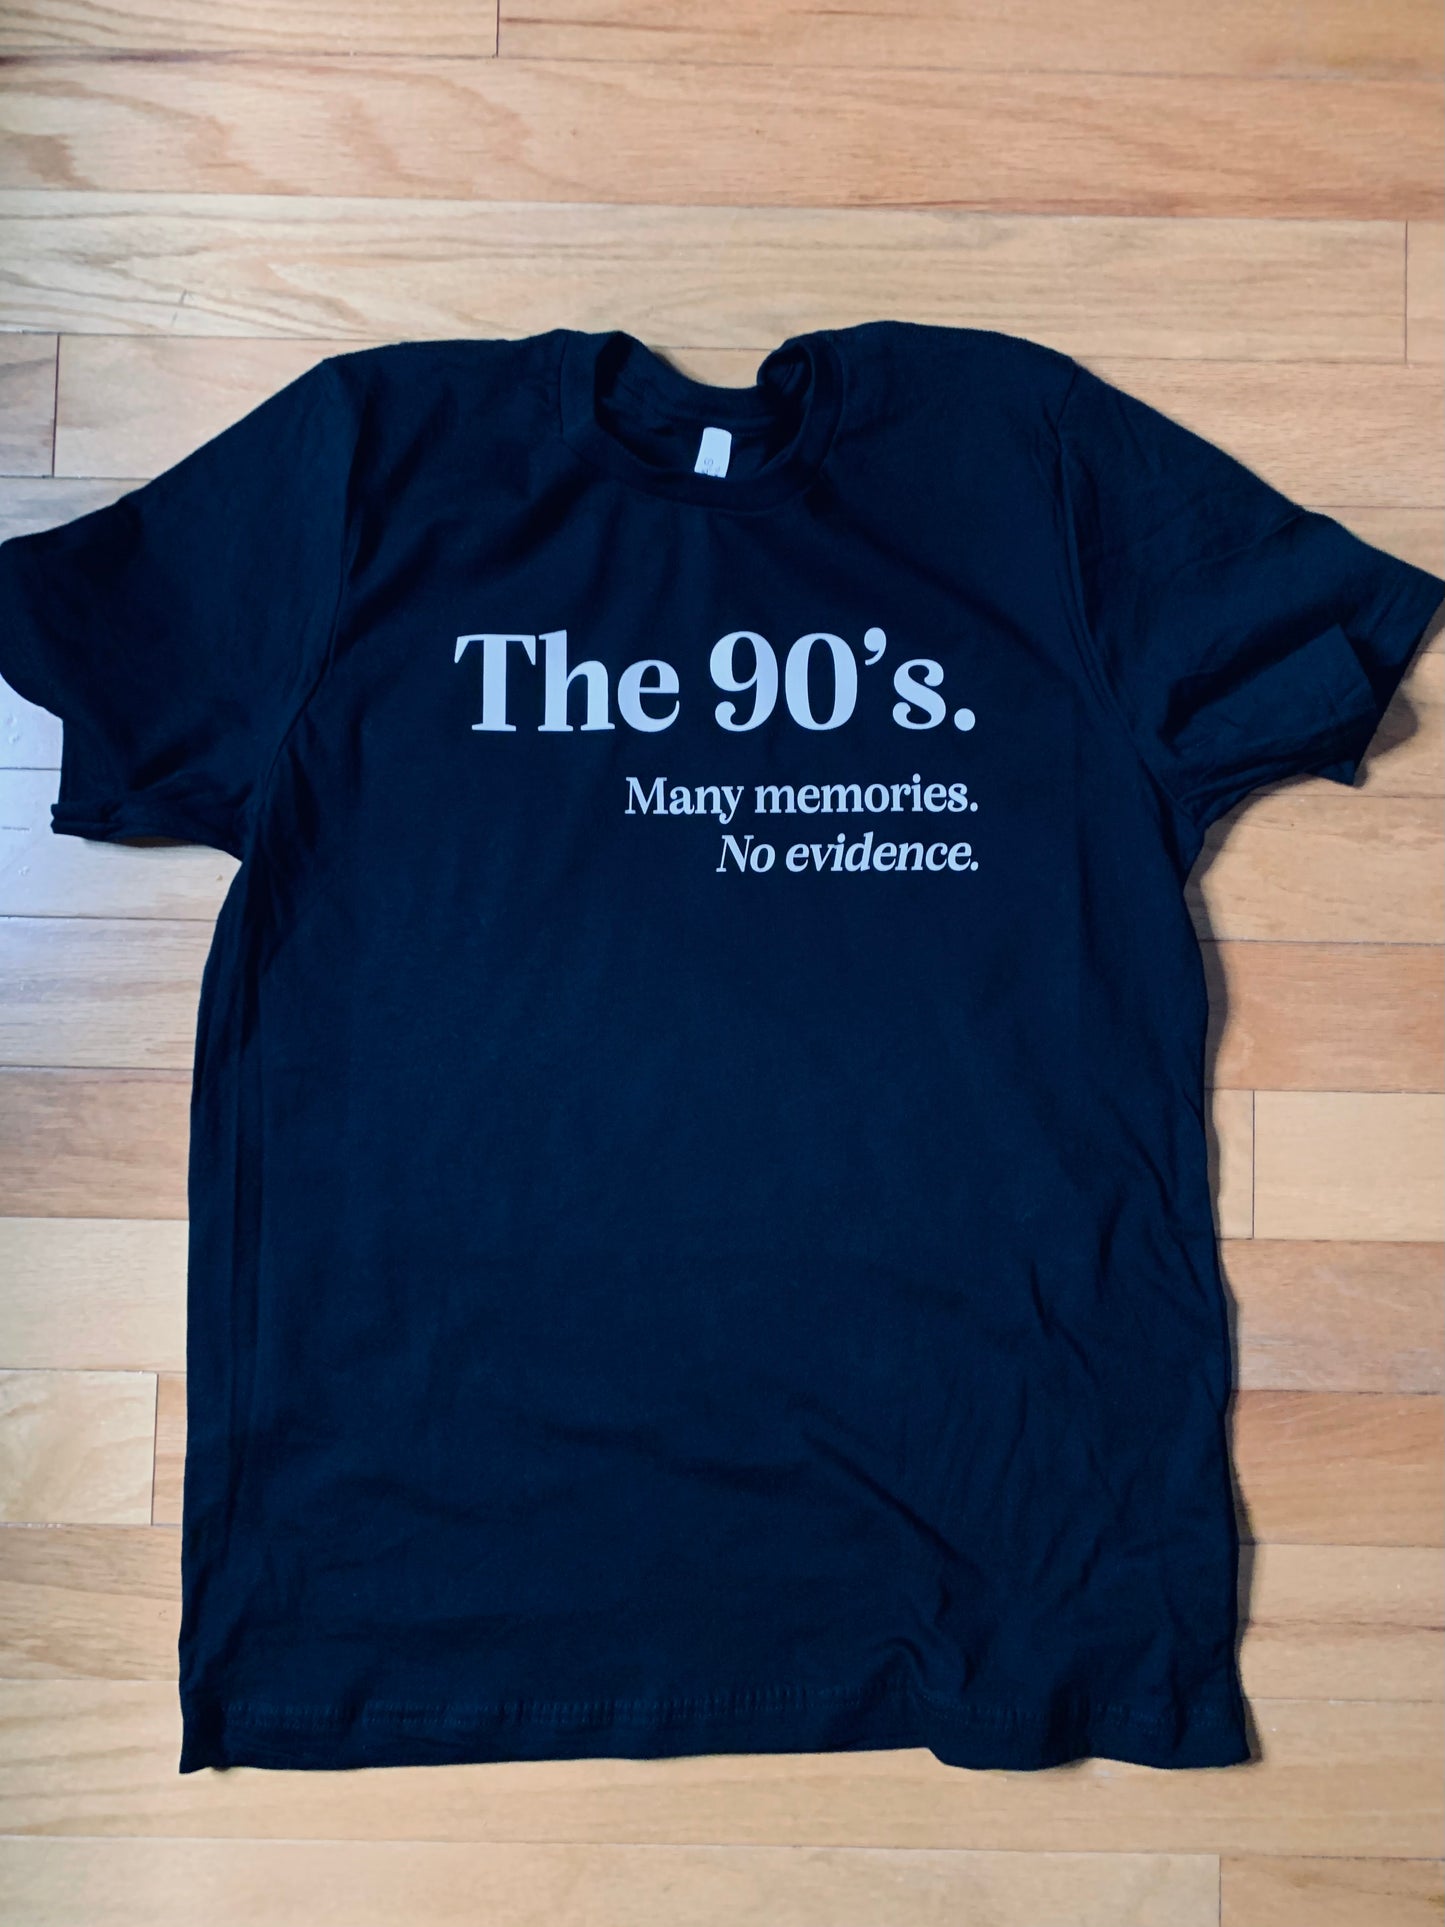 The 90’s. Many Memories. No Evidence.